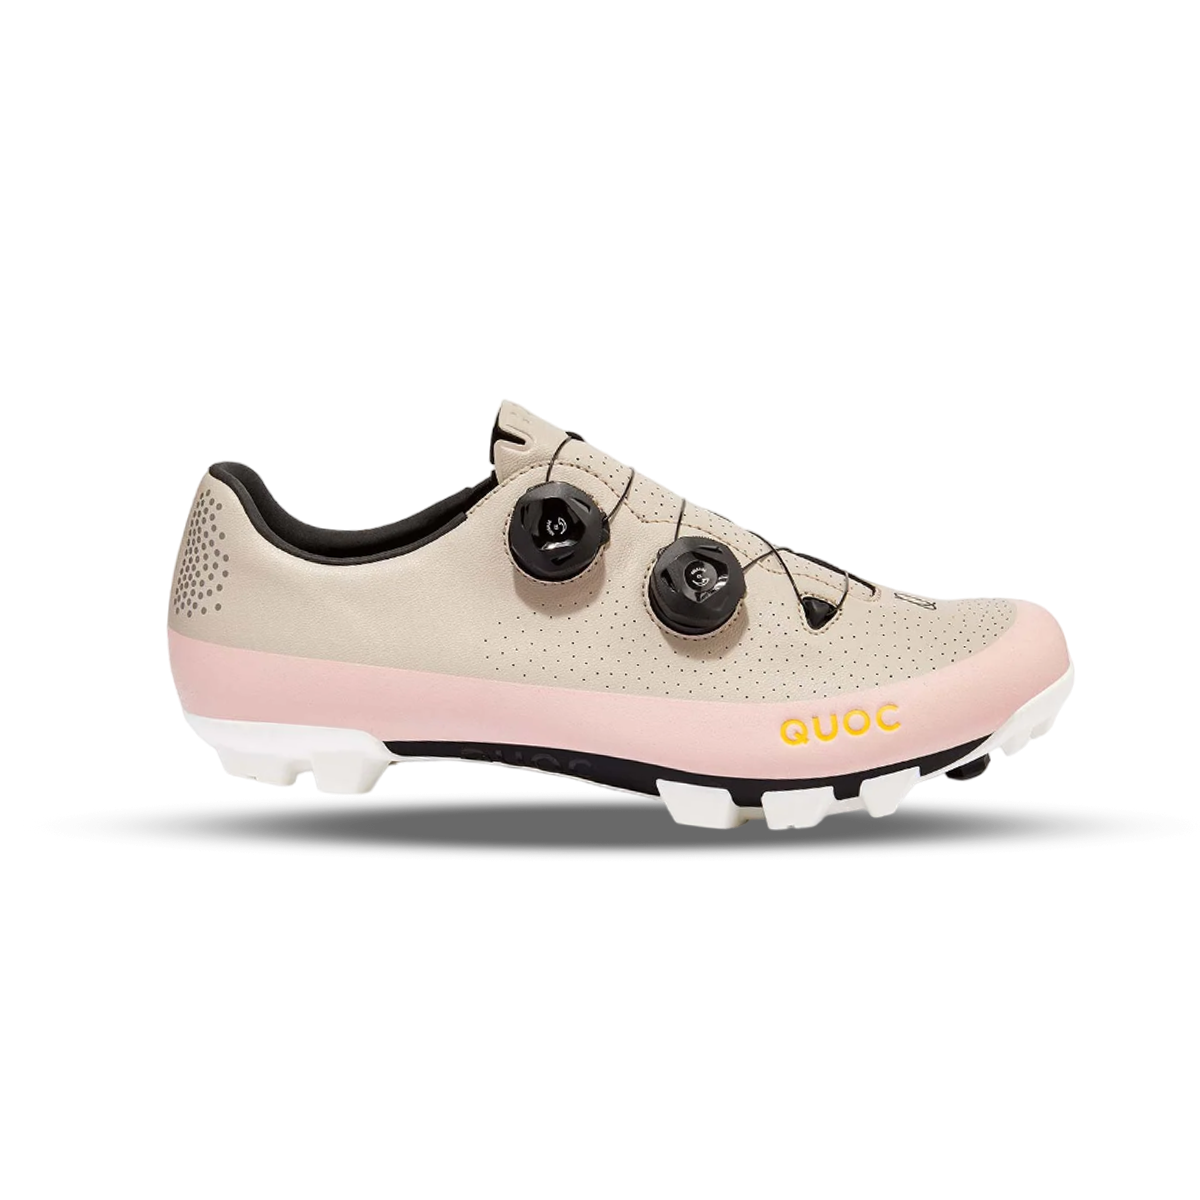 Gran Tourer XC-Schuh - Dusty Pink